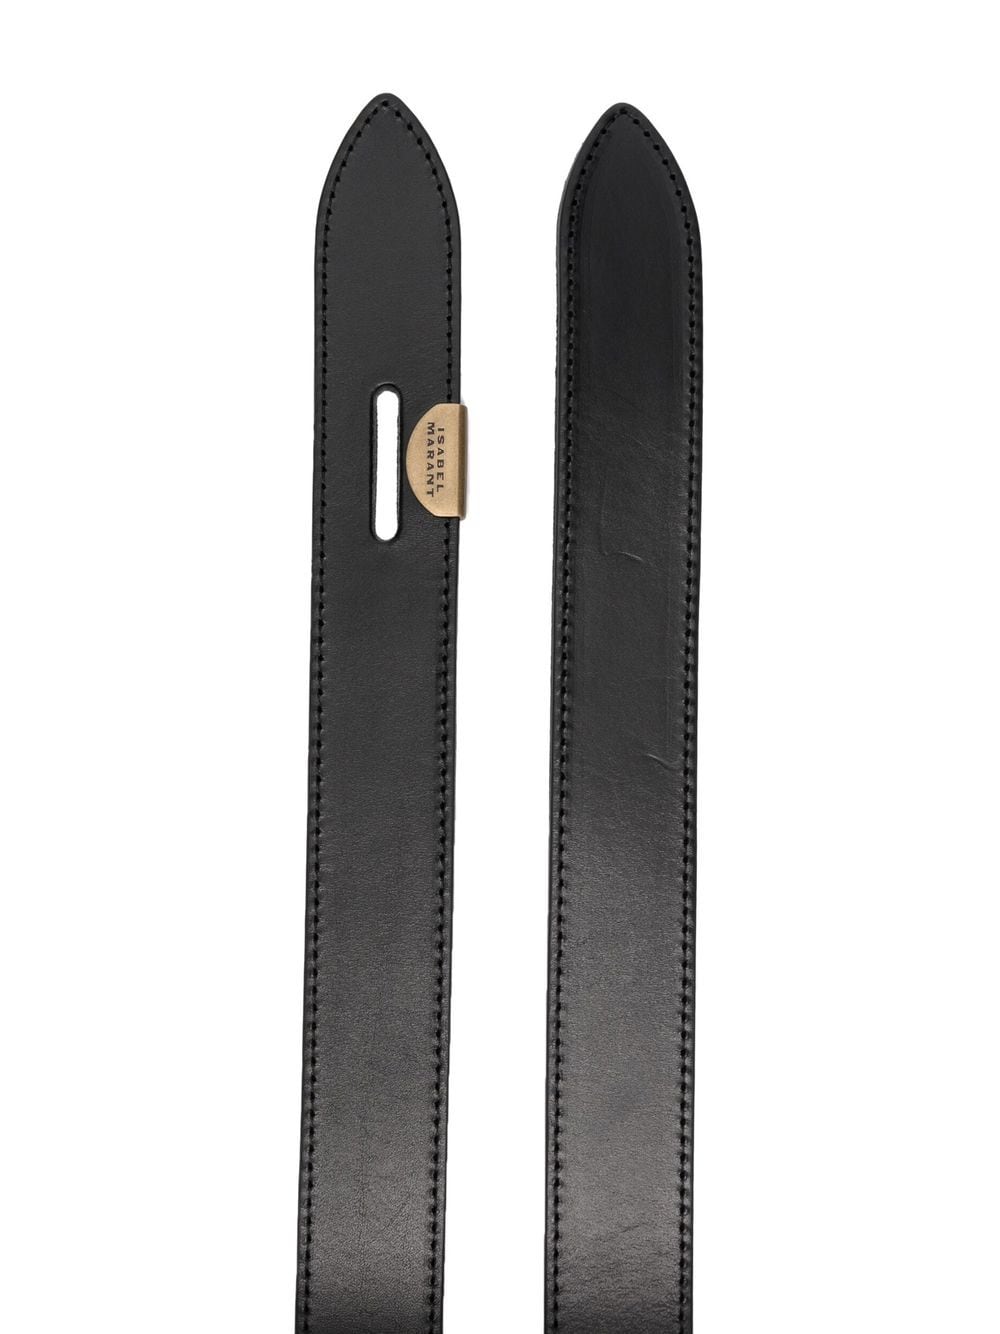 Lecce leather belt